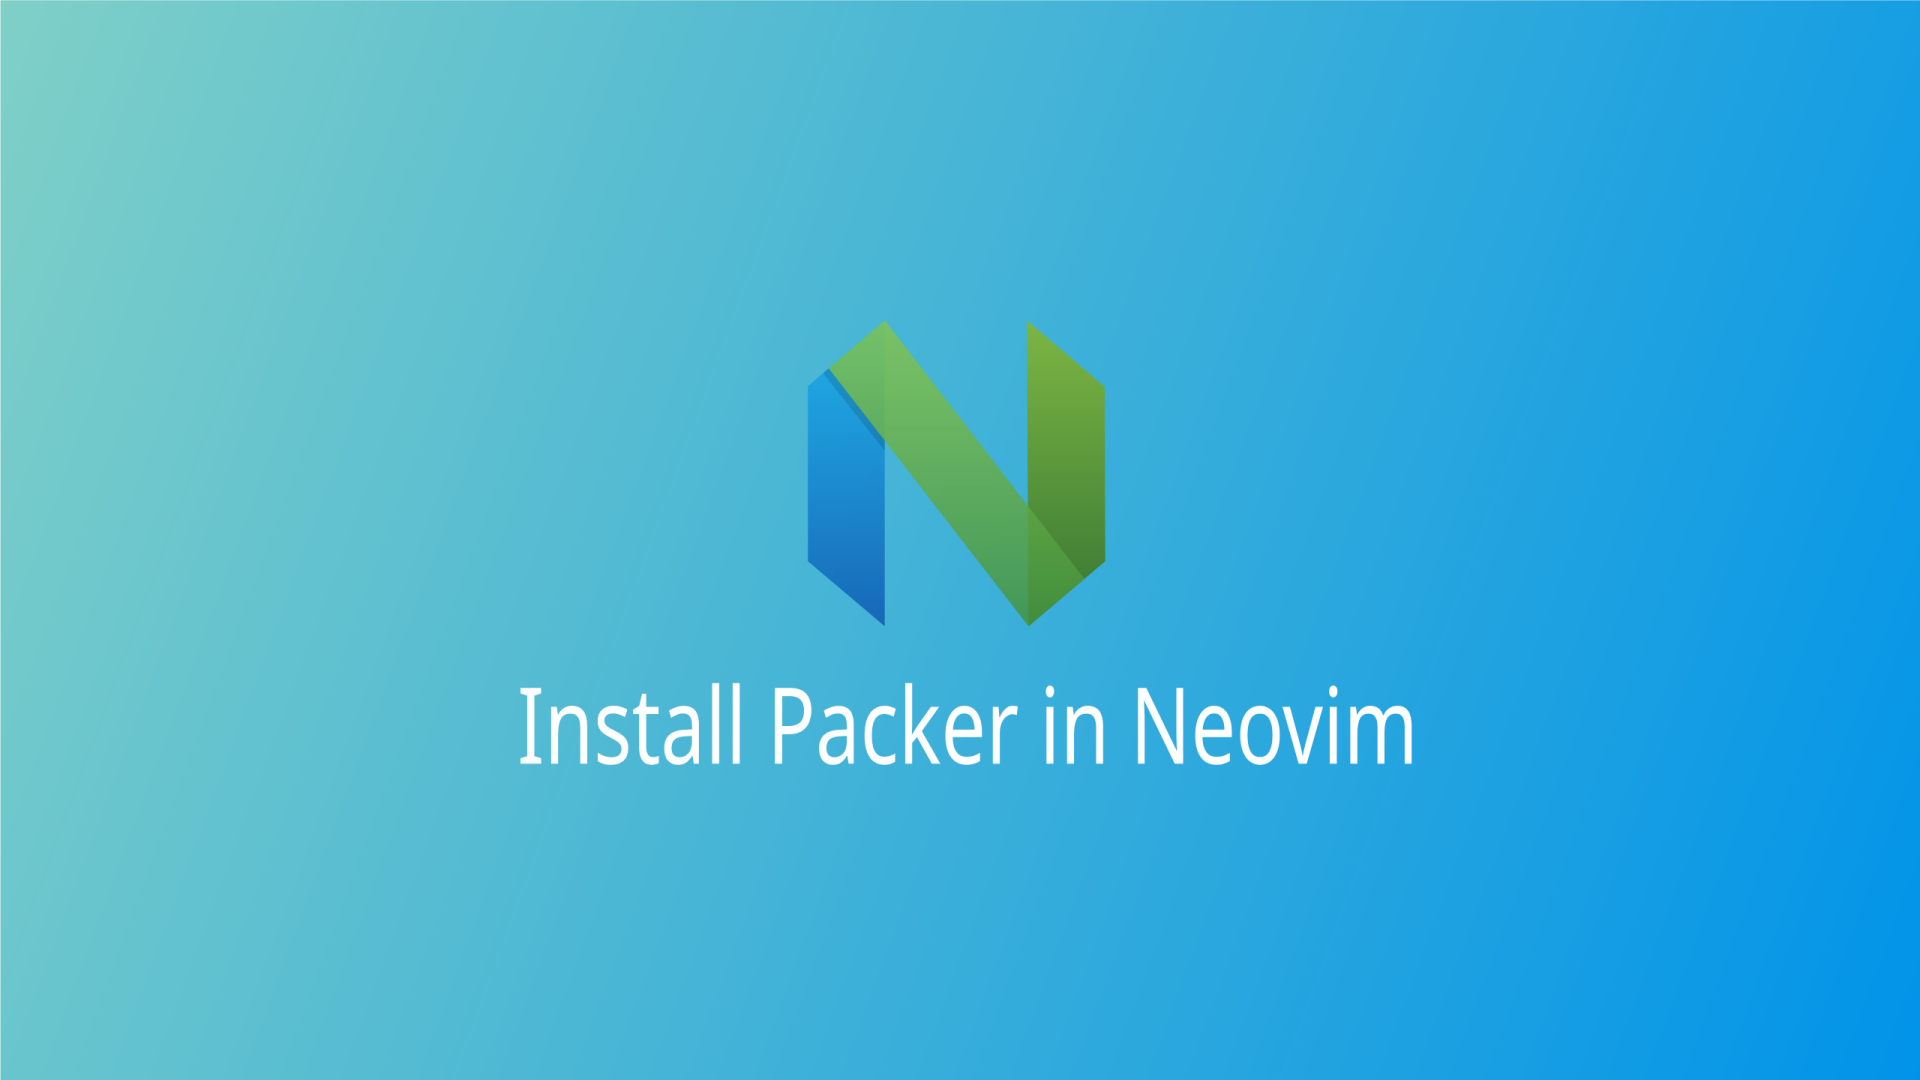 Install and Use Packer in Neovim